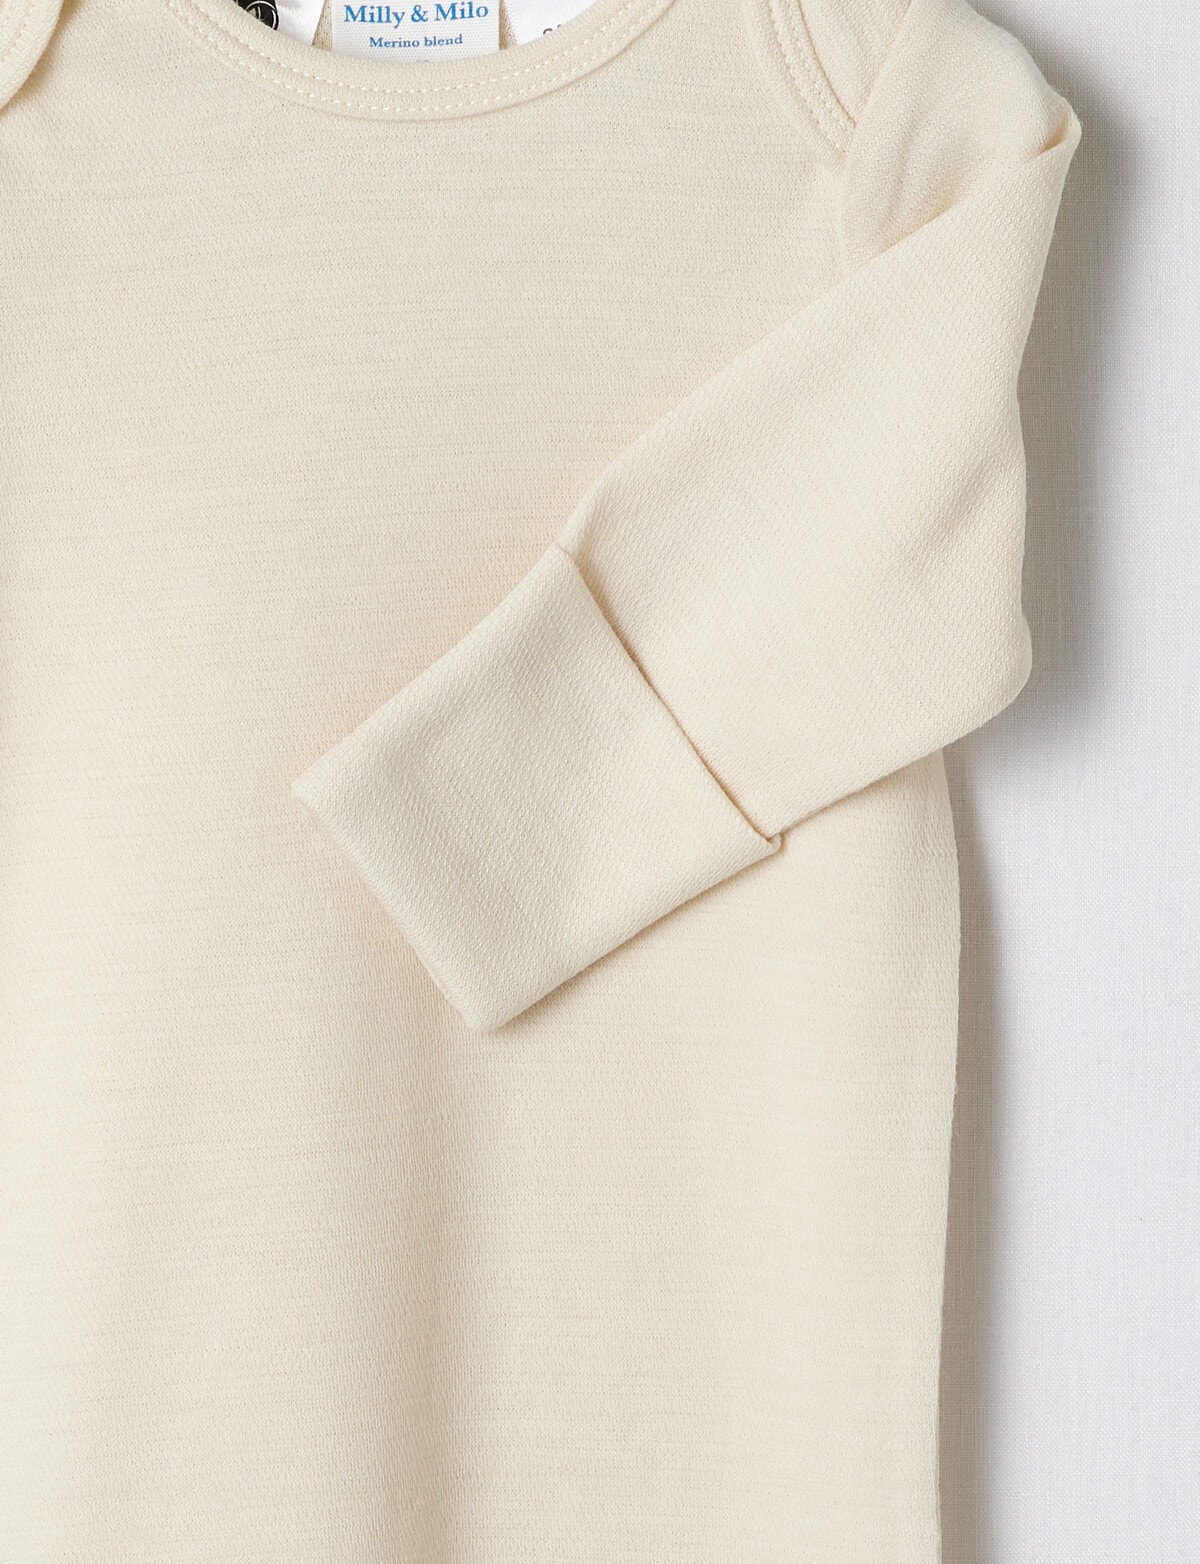 Milly & Milo Merino Blend Gown, Vanilla - Sleepwear